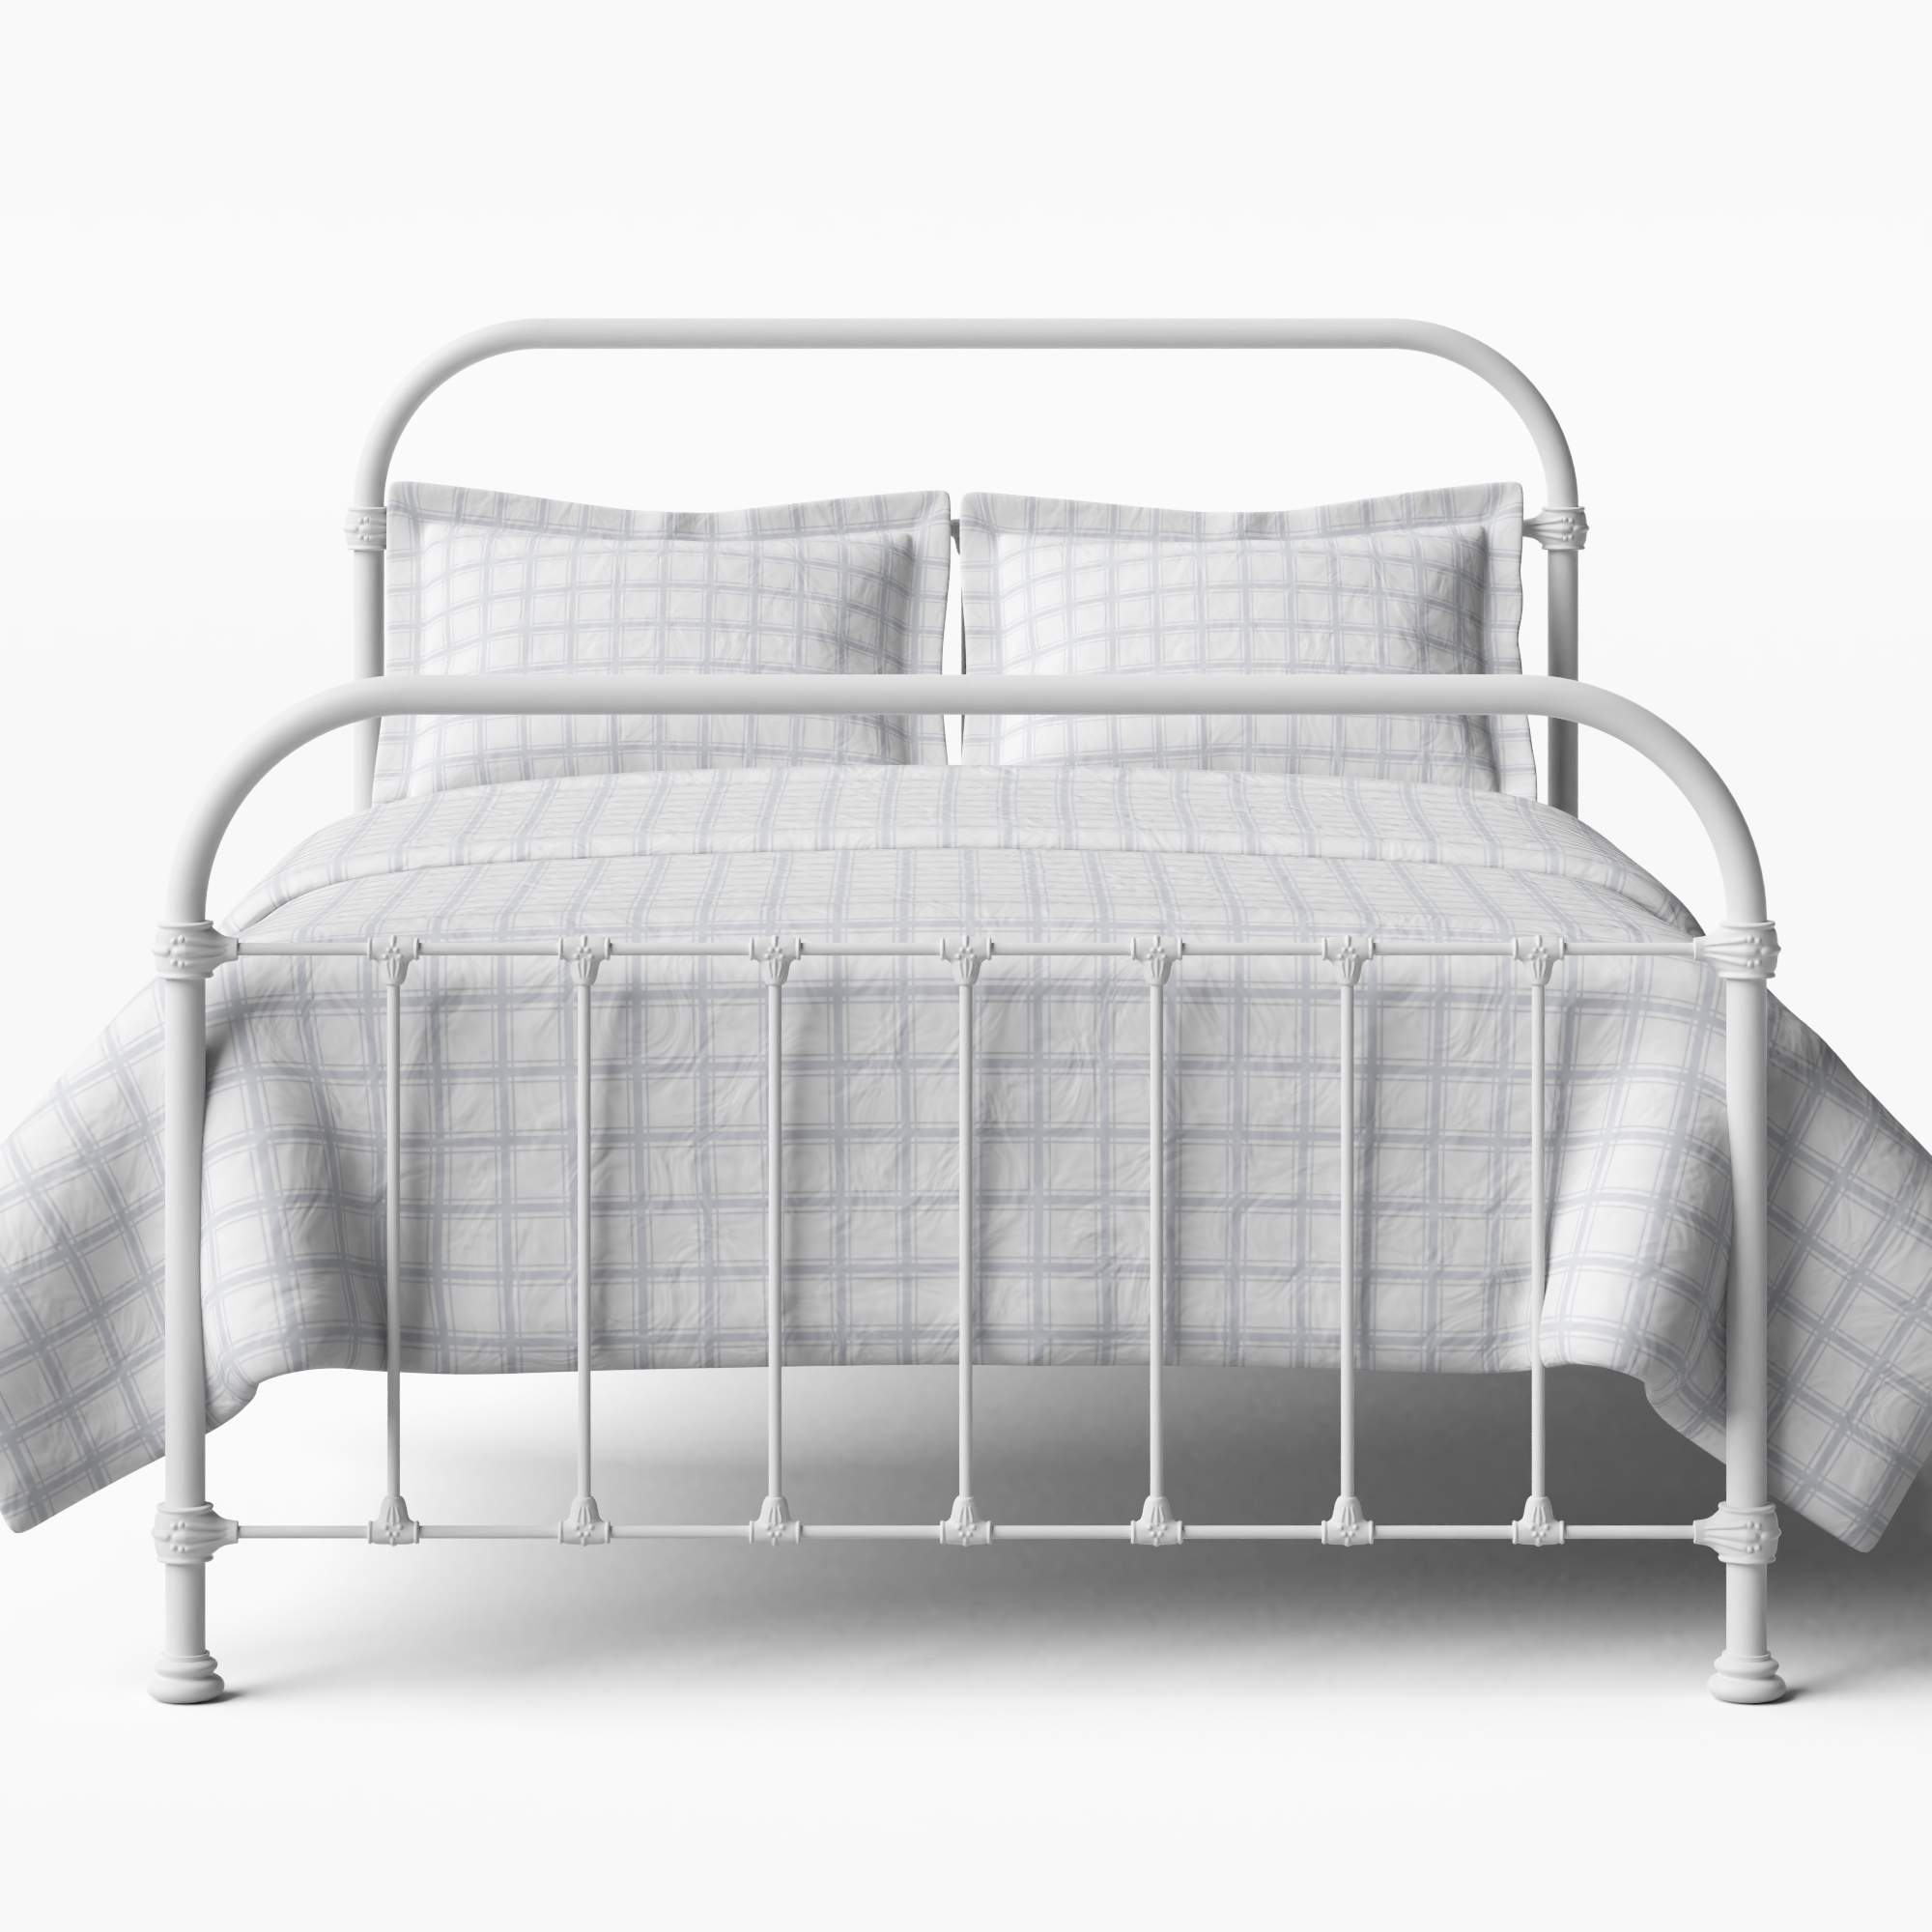 Timolin iron/metal bed in white